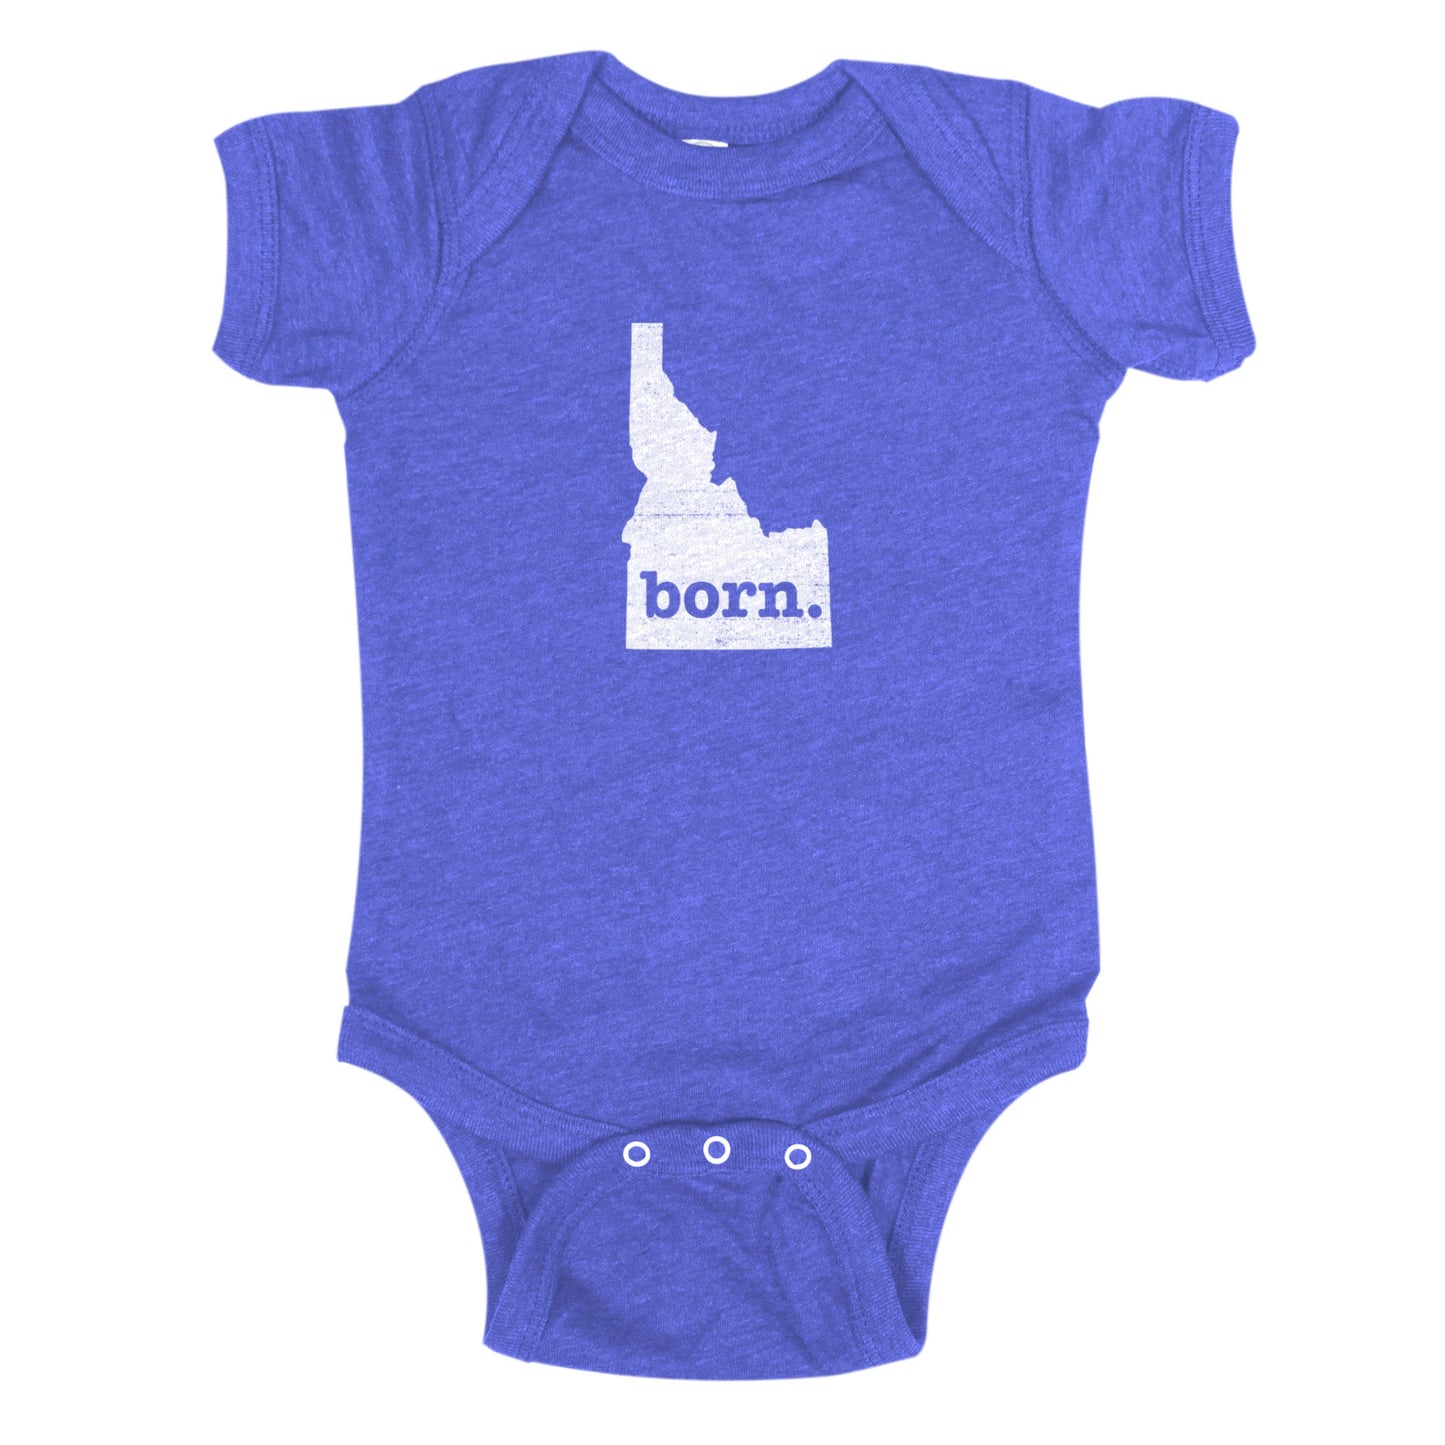 born. Baby Bodysuit - Idaho